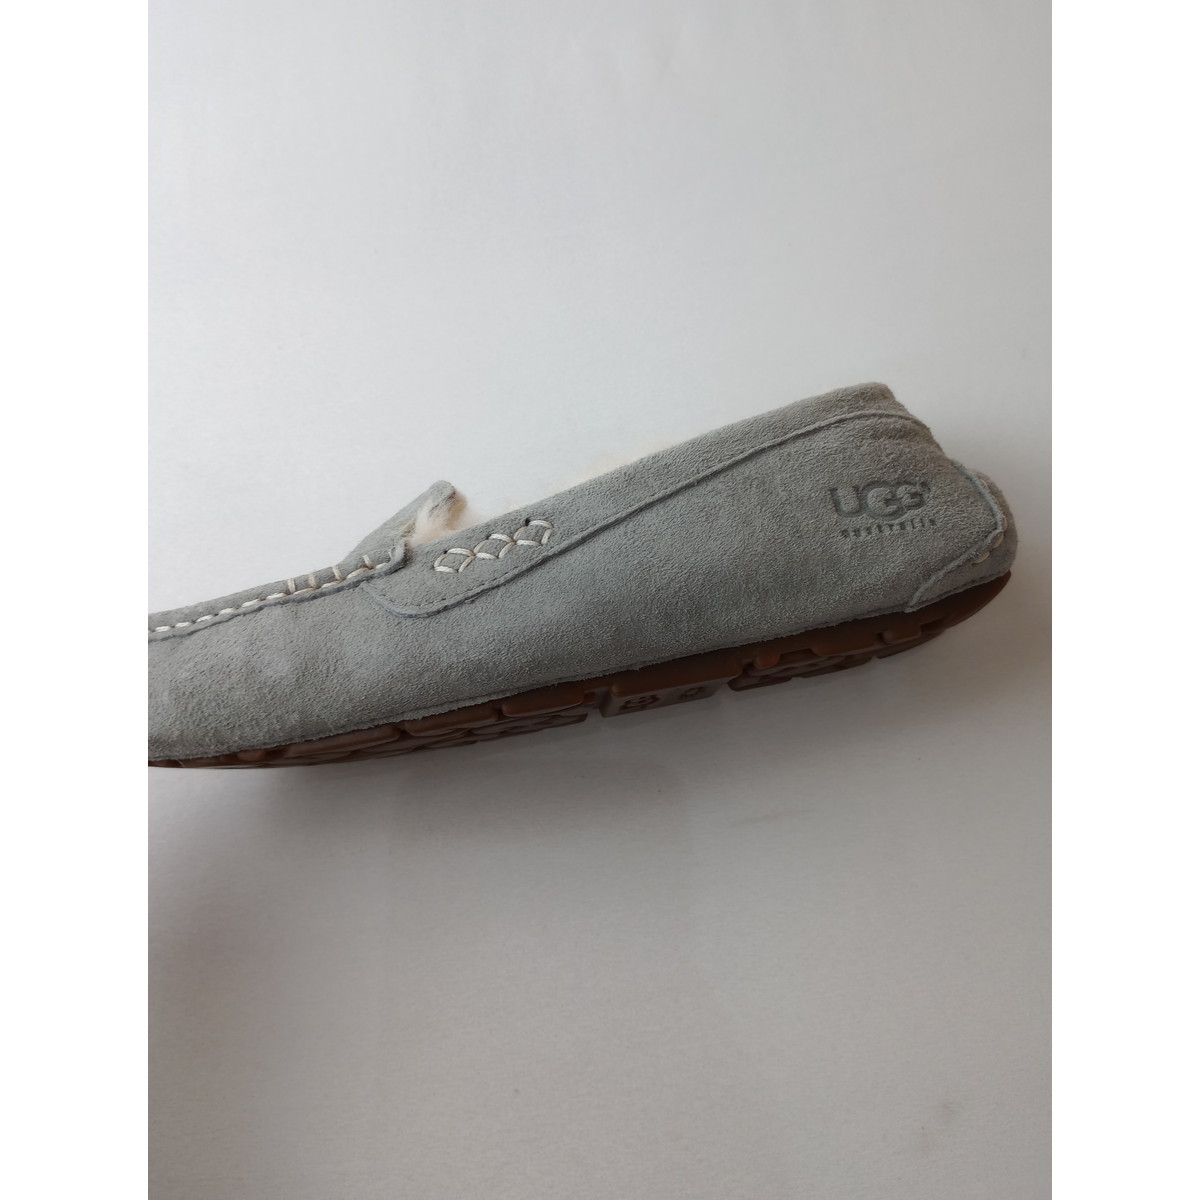 UGG UGG W ANSLEY 3312 moccasin shoes gray 23